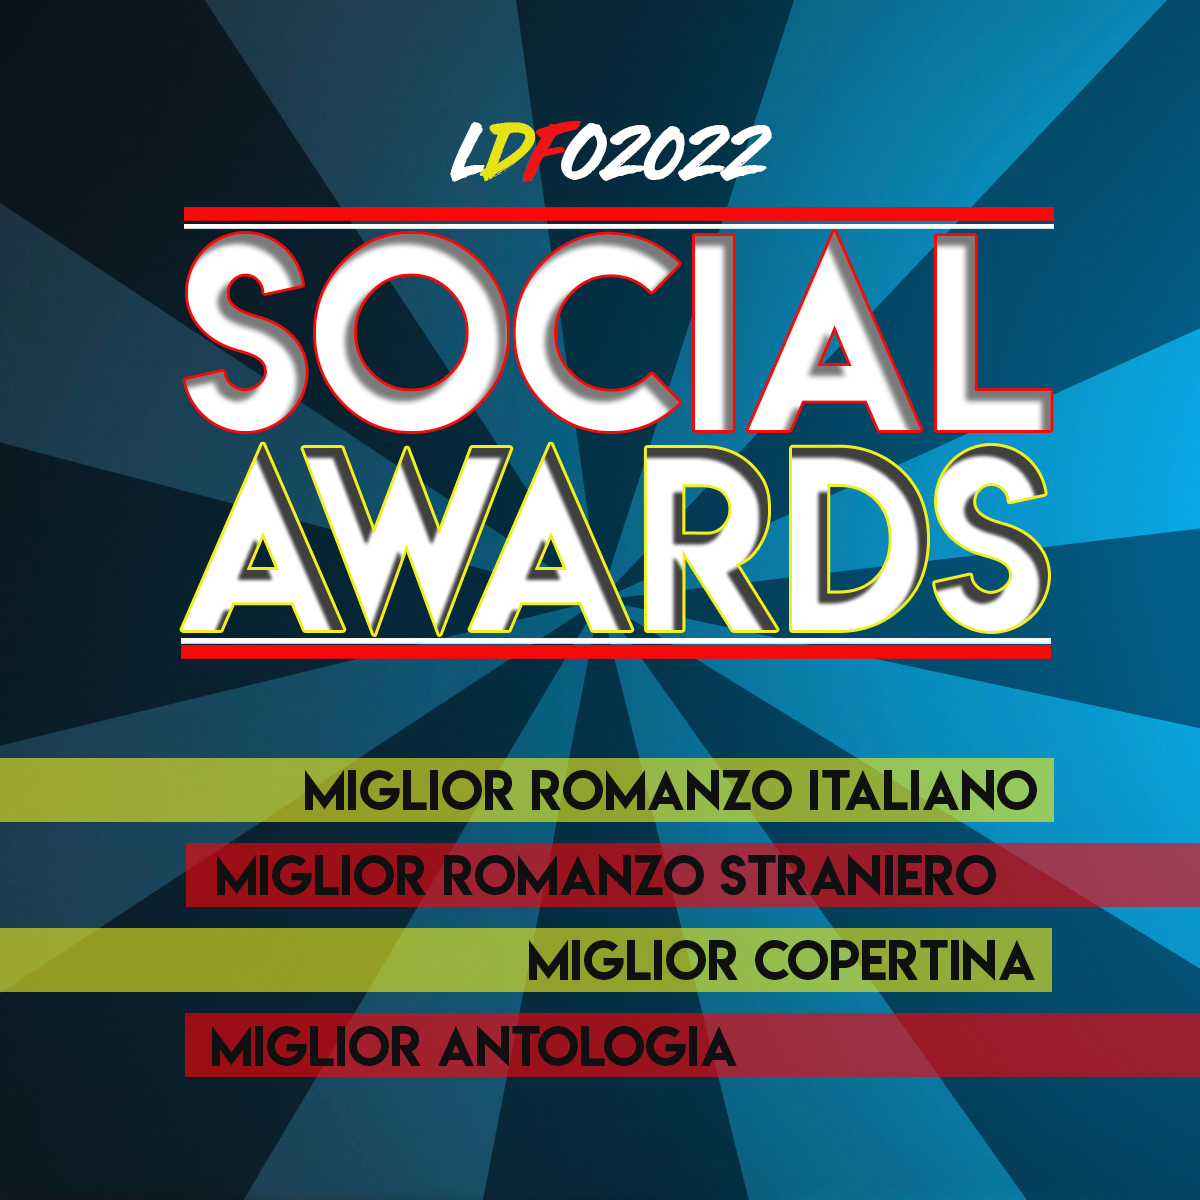 social awards 2022 ldfo